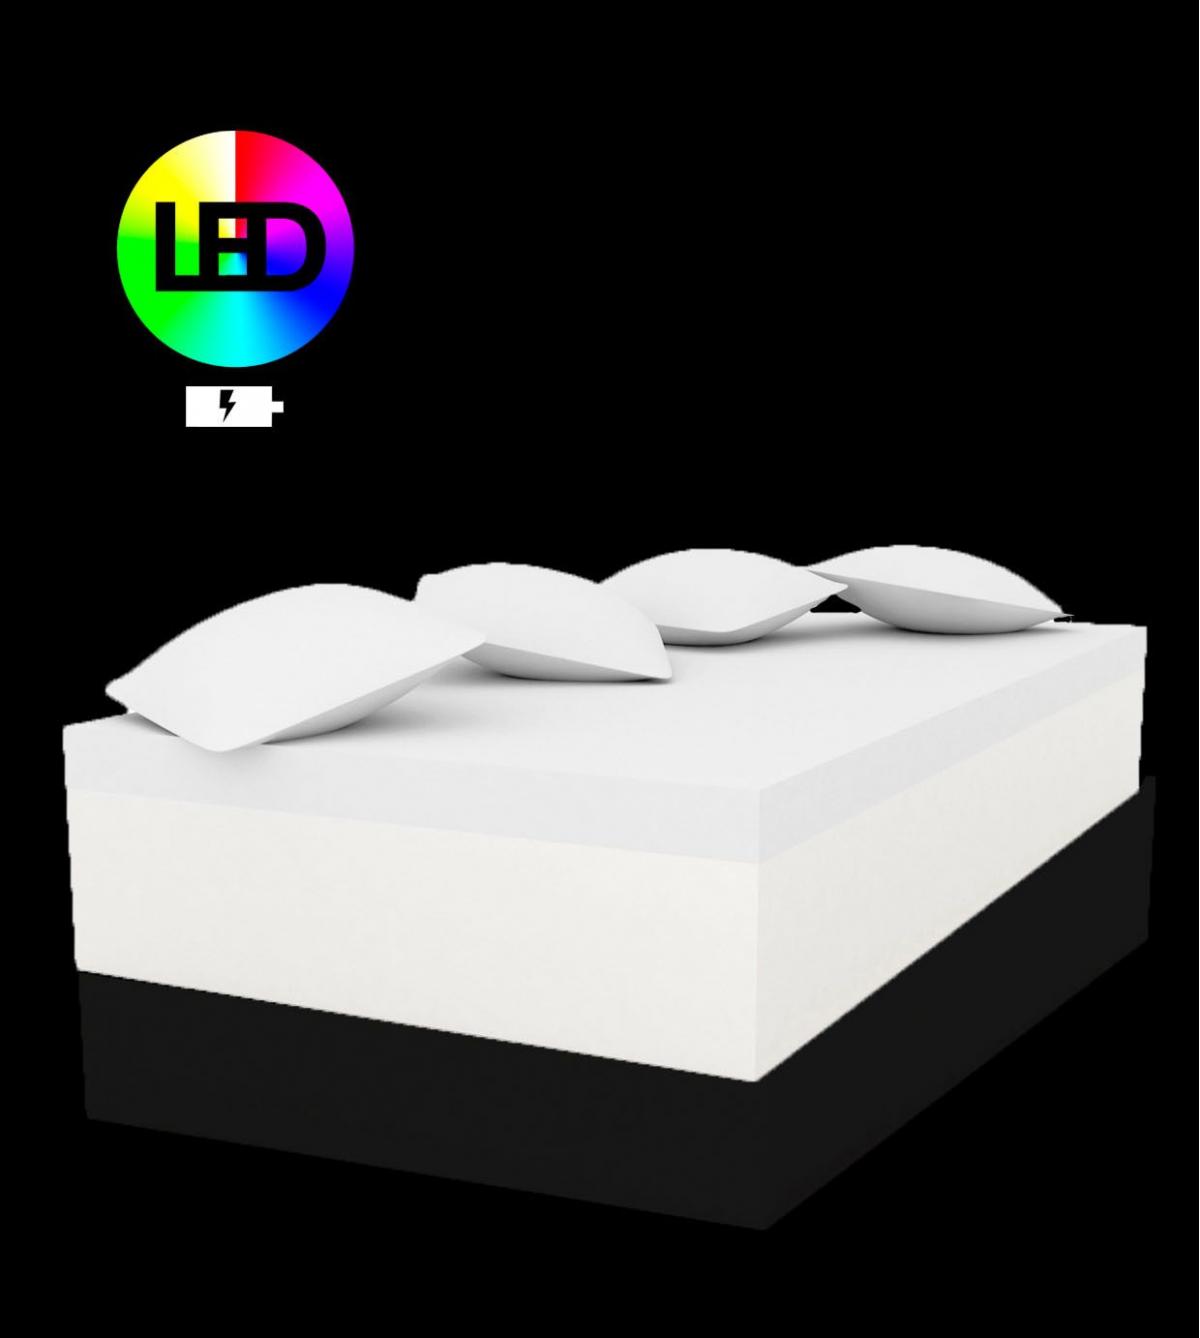 Кровать Jut с 4 подушками 50x50 cm LED